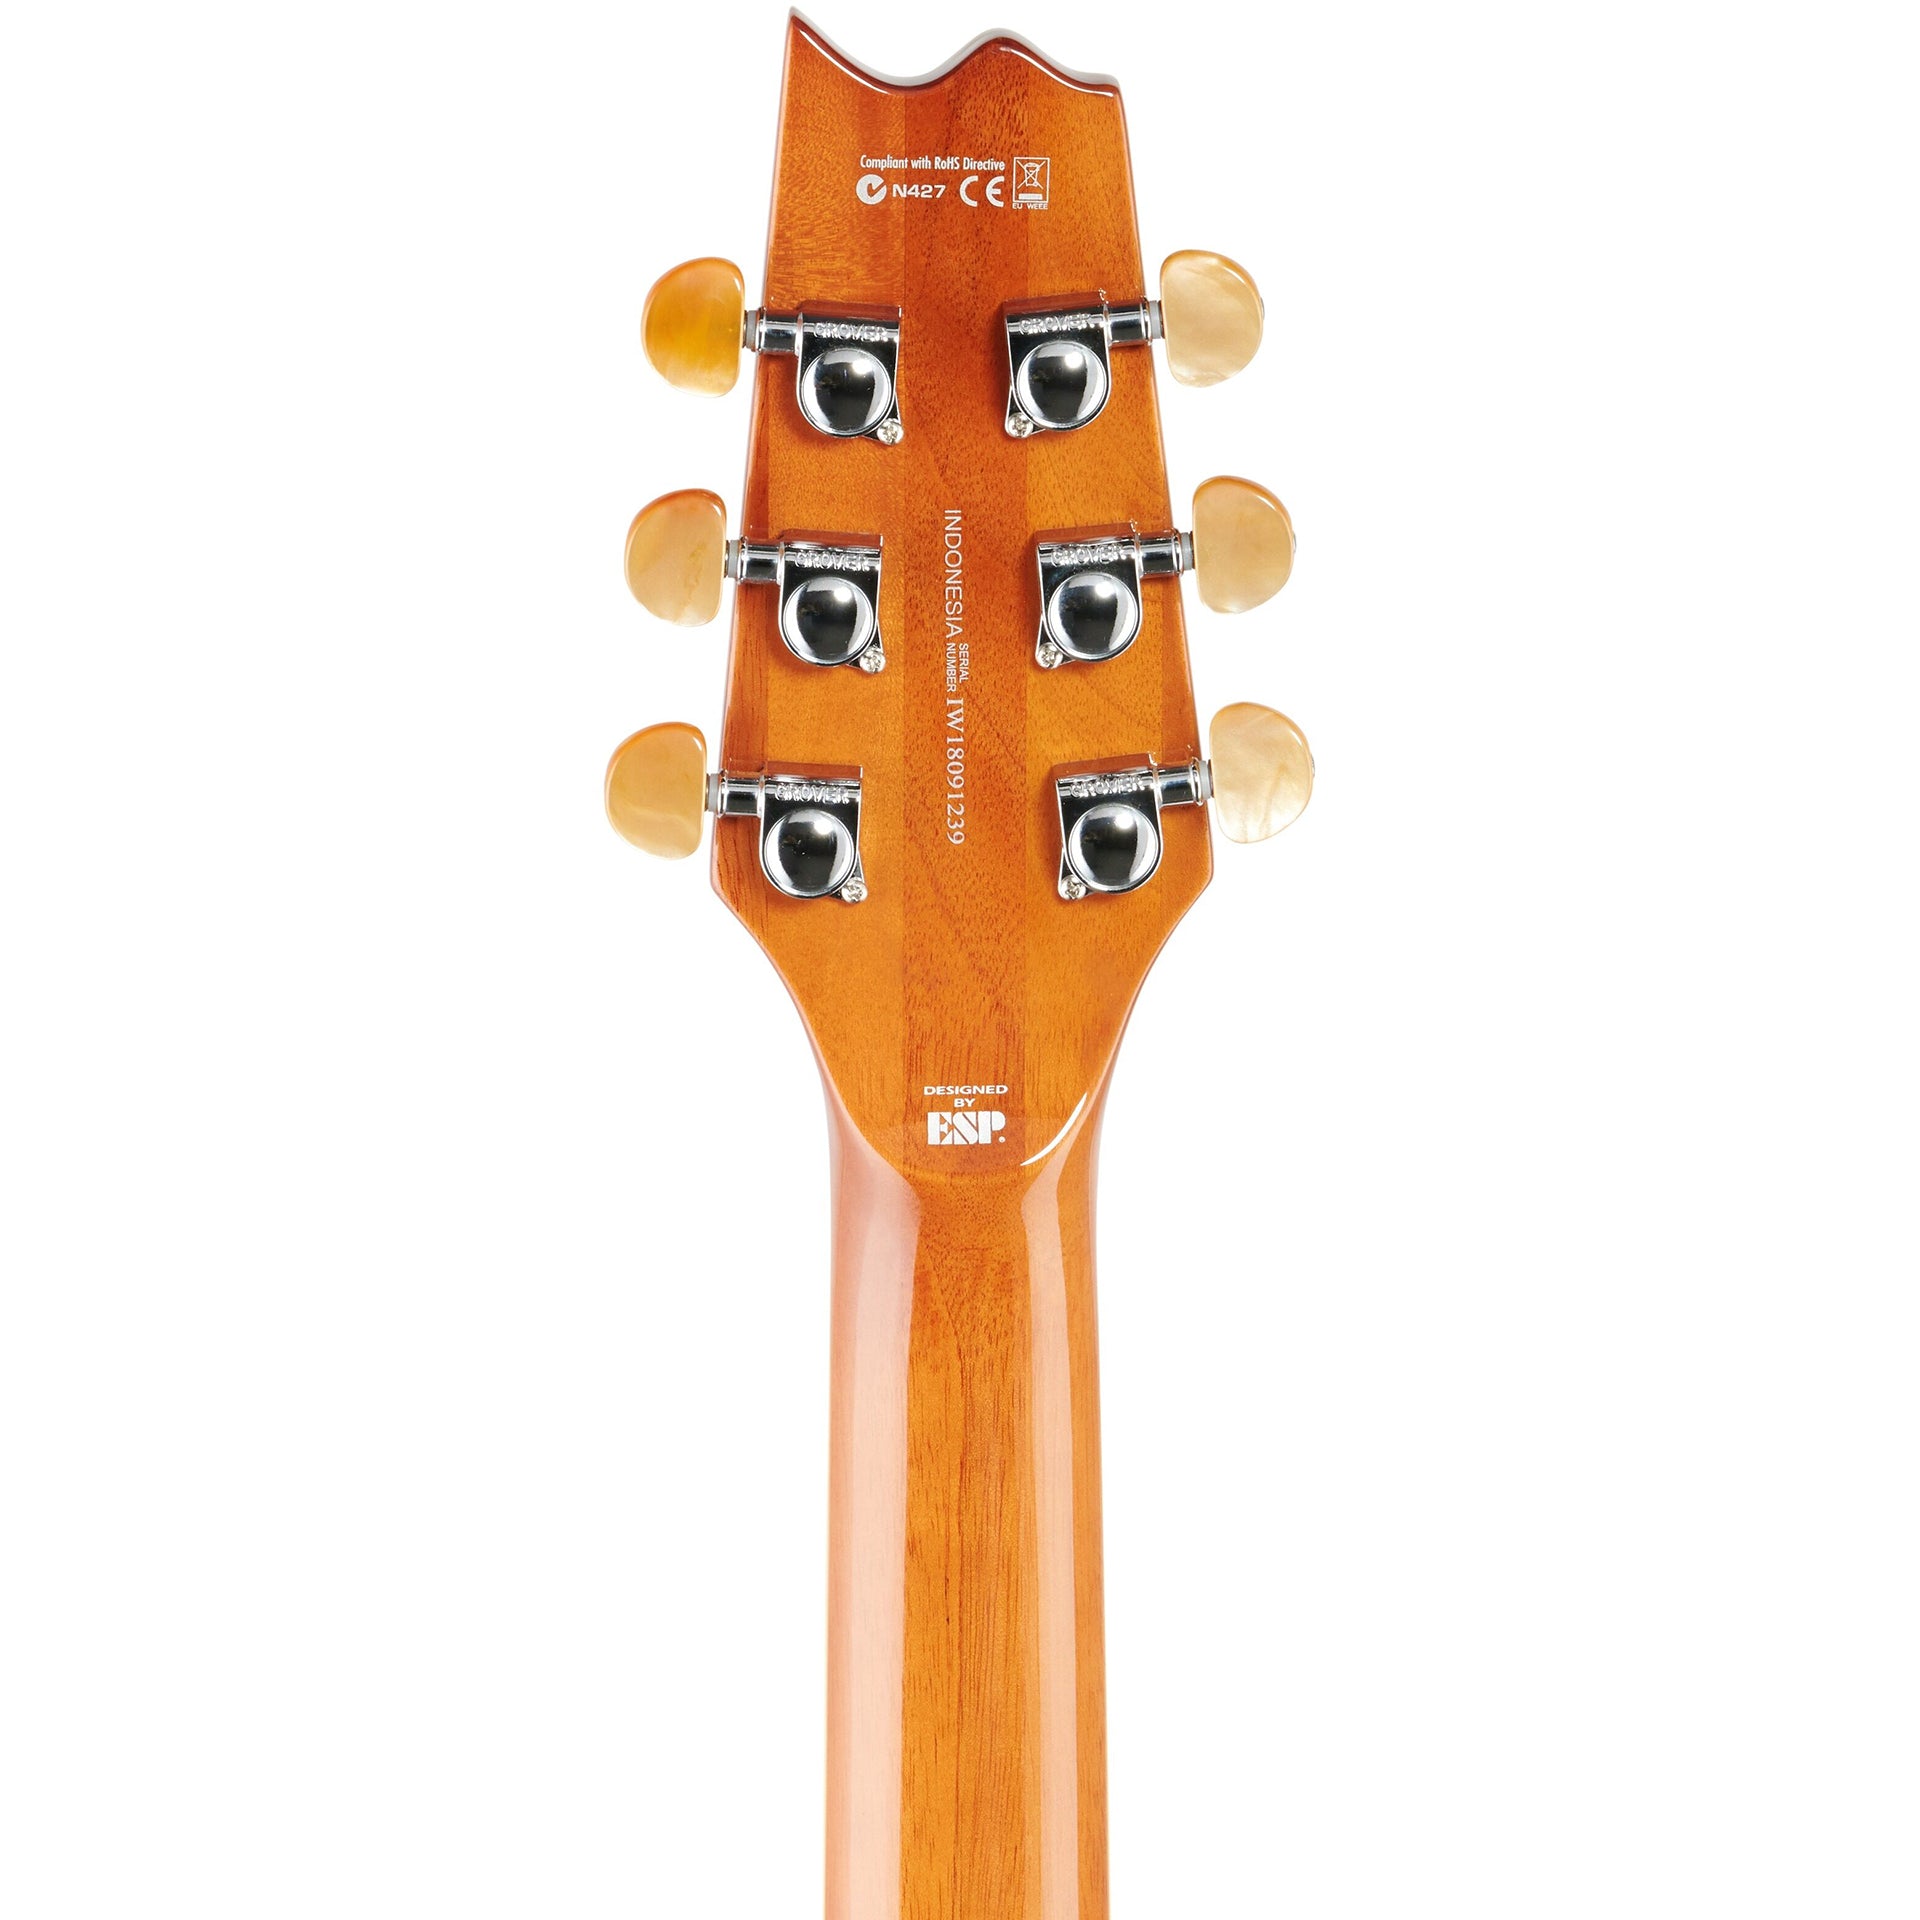 ESP LTD TL-6FM Thinline Acoustic-electric Guitar - Aqua Marine Burst